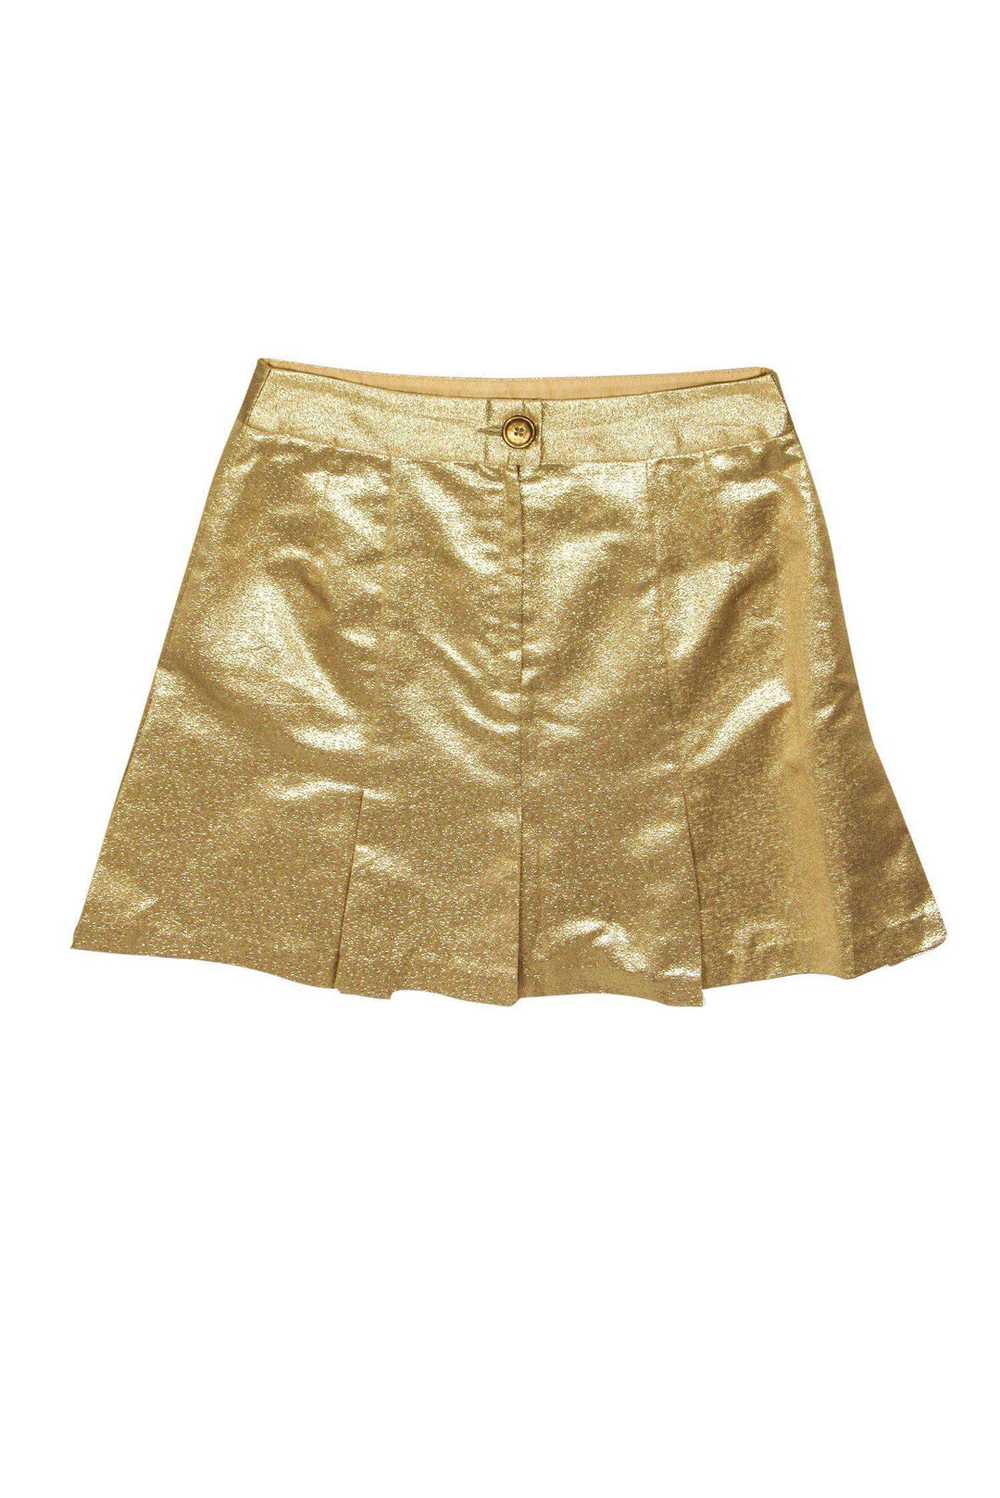 Nanette Lepore - Metallic Gold A-Line Skirt Sz 0 - image 2